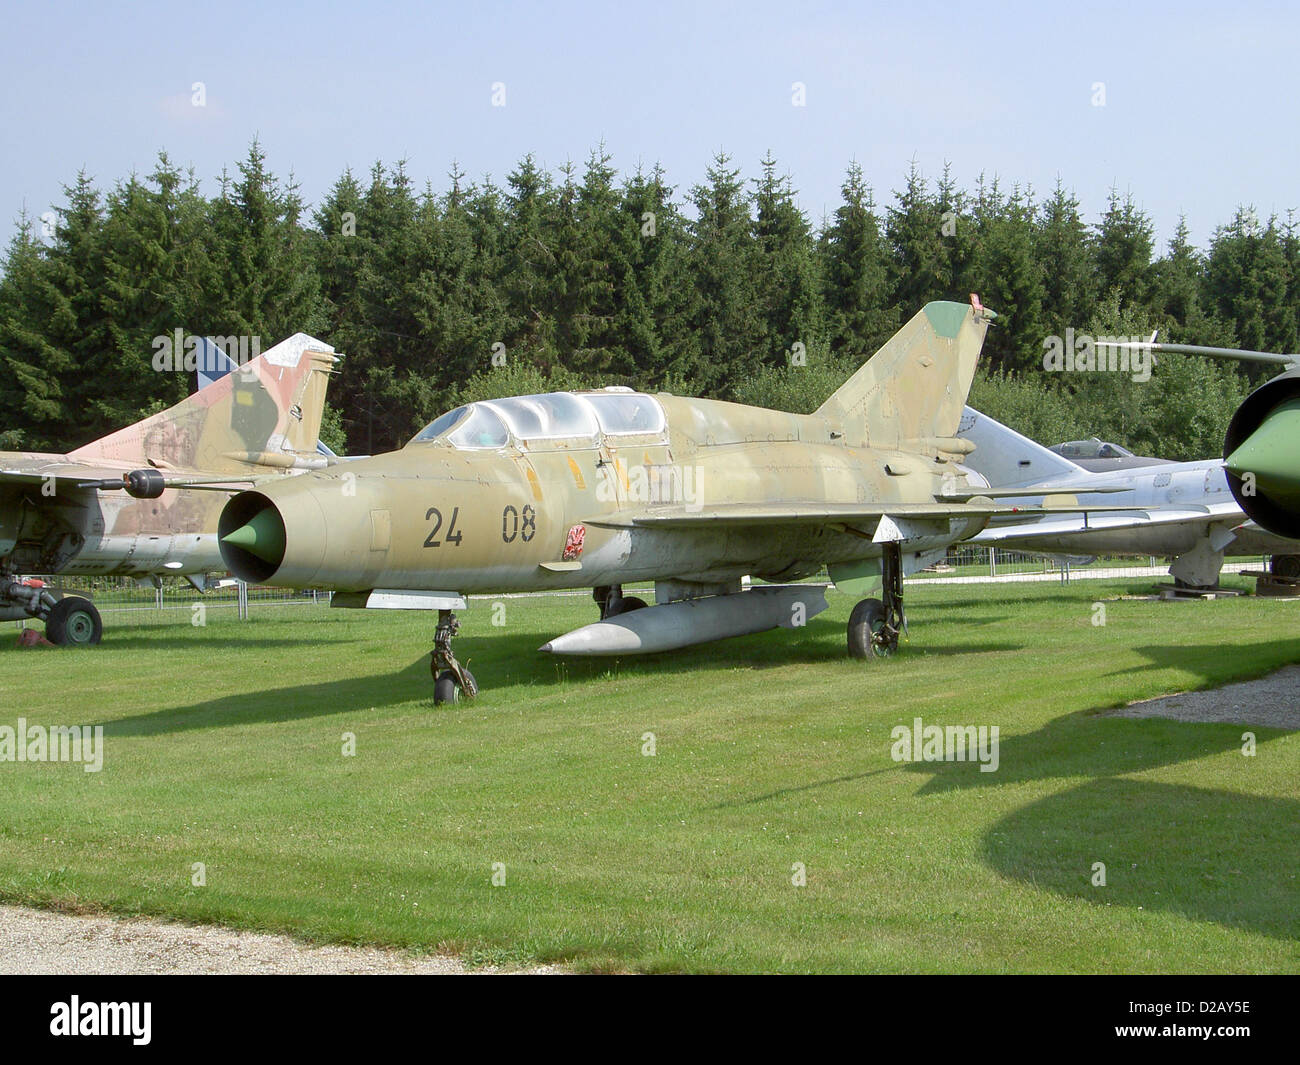 Mikoyan Gurevich MiG-21US, 24 08, CN 12408-238 at Hermeskeil Stock Photo